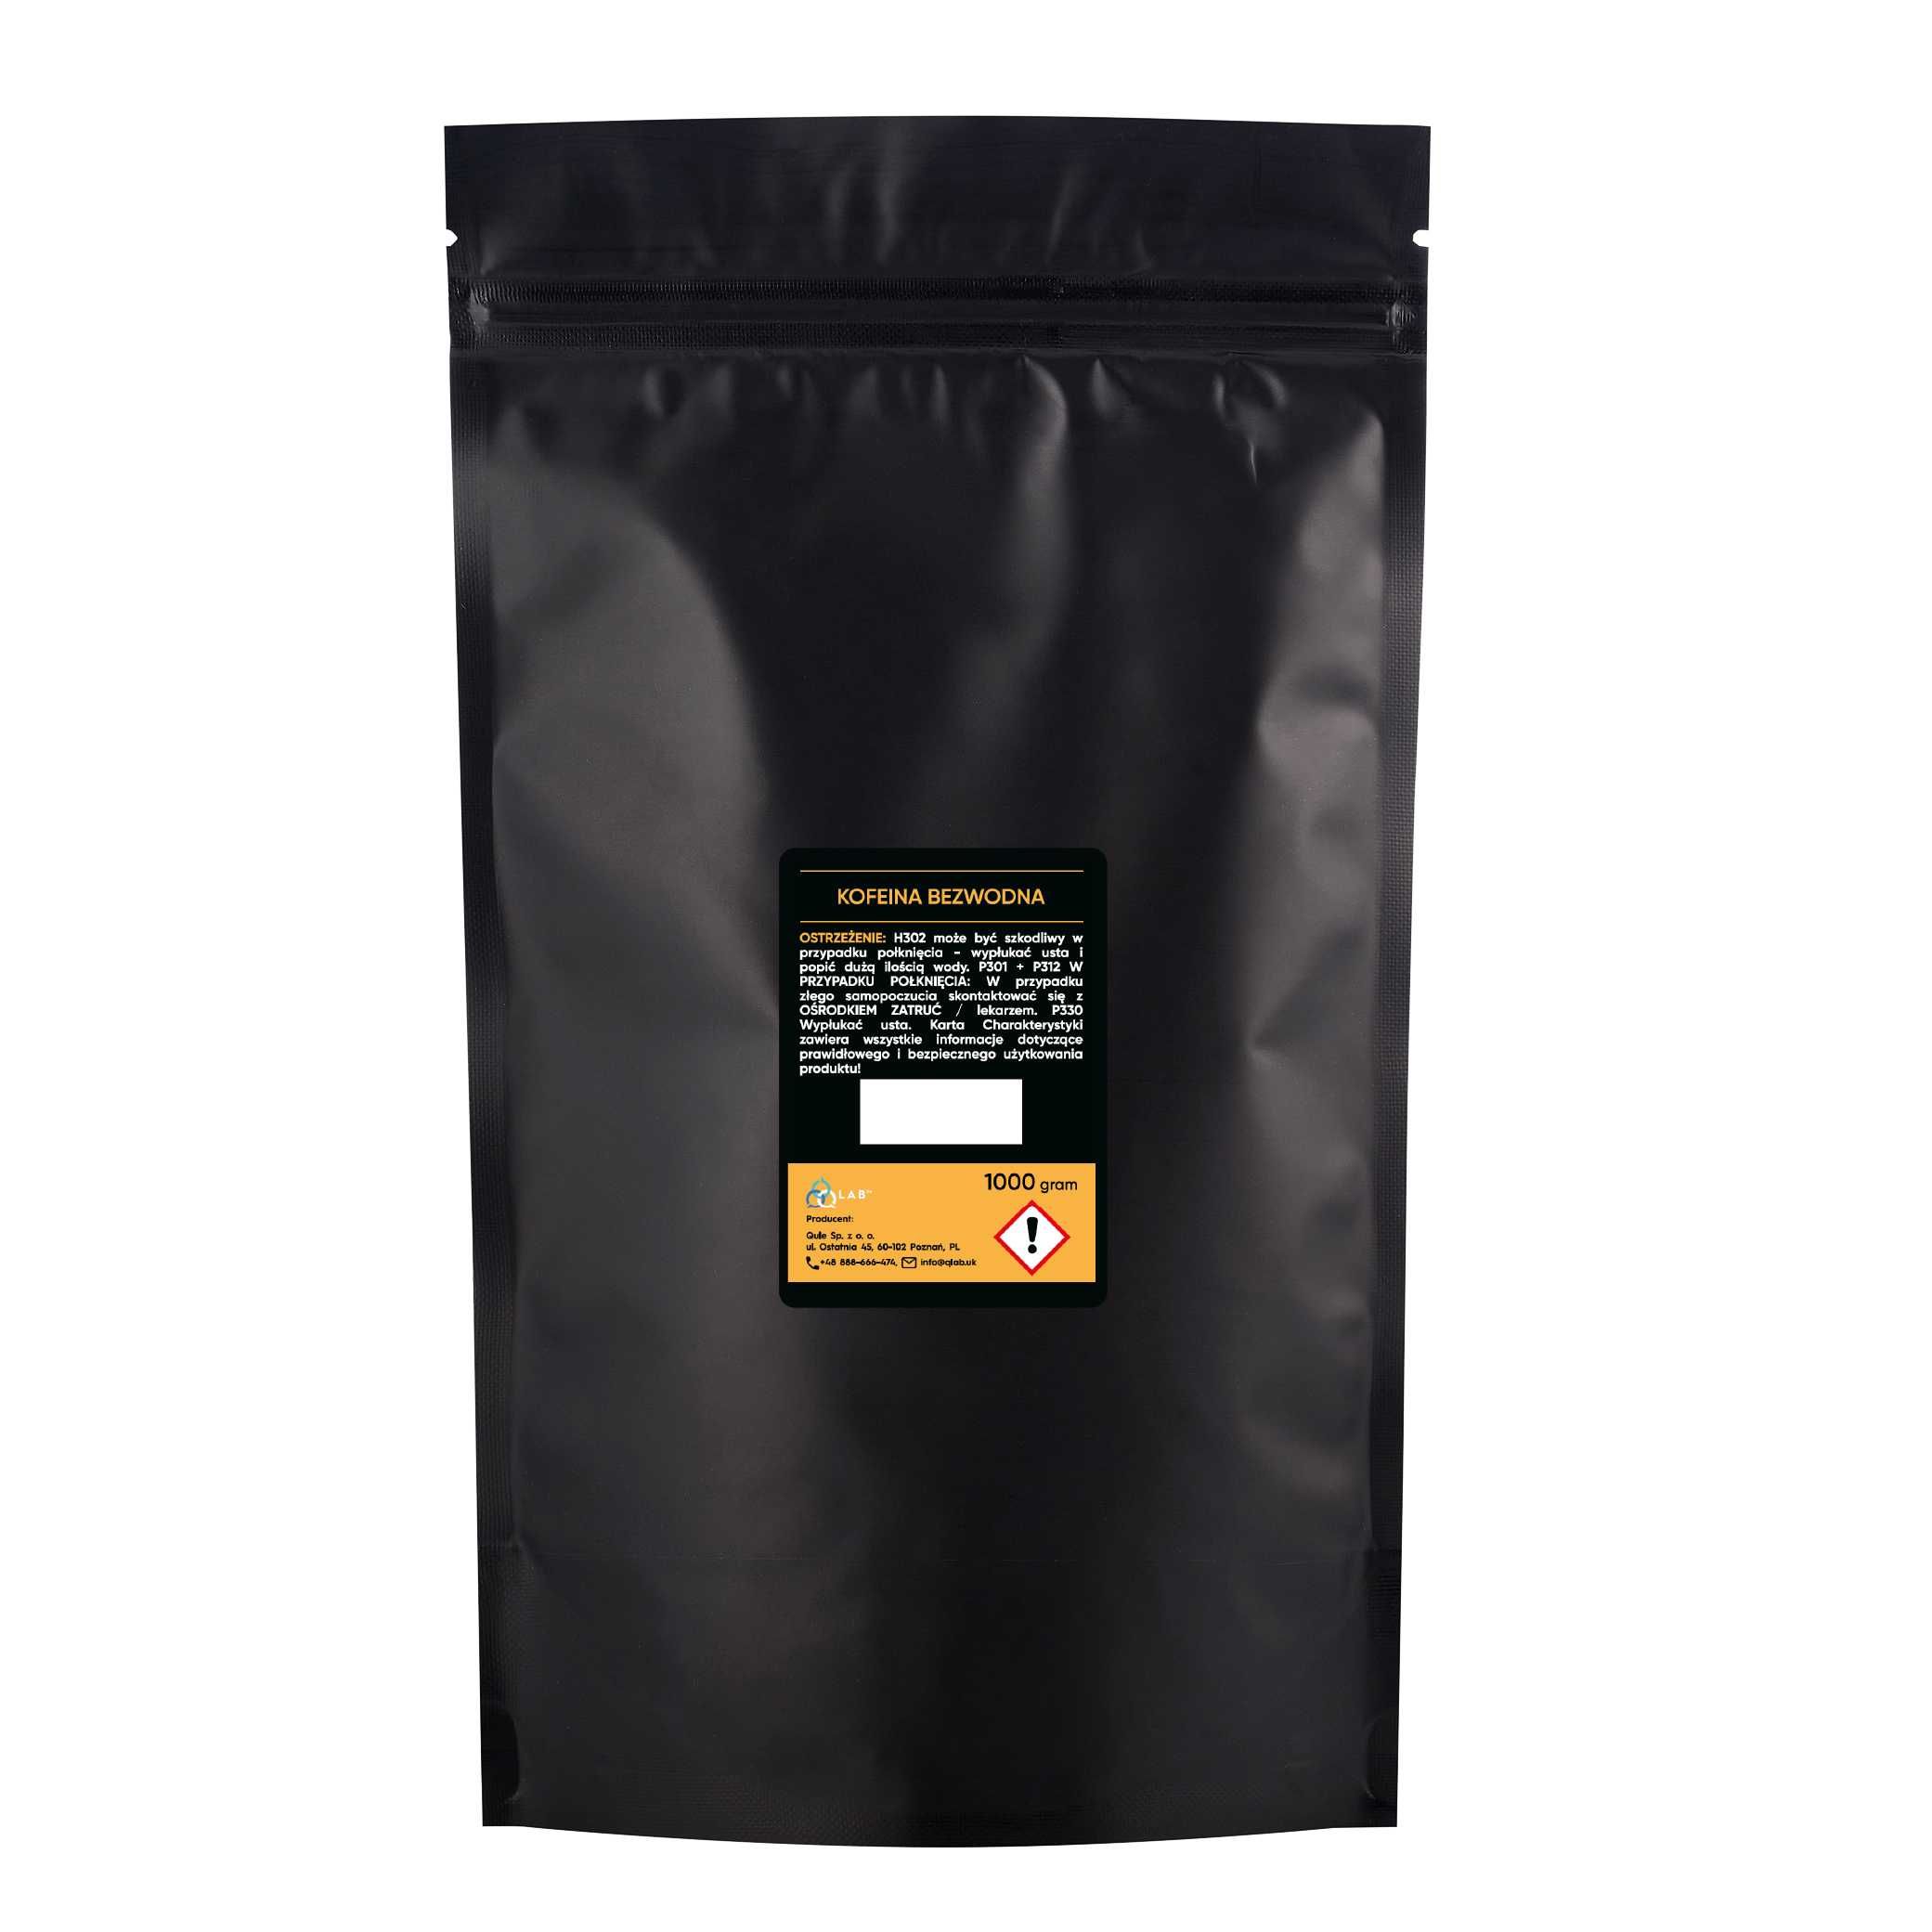 Kofeina Bezwodna // Aarti // Beczka // Premium // 25kg Od Qlab™